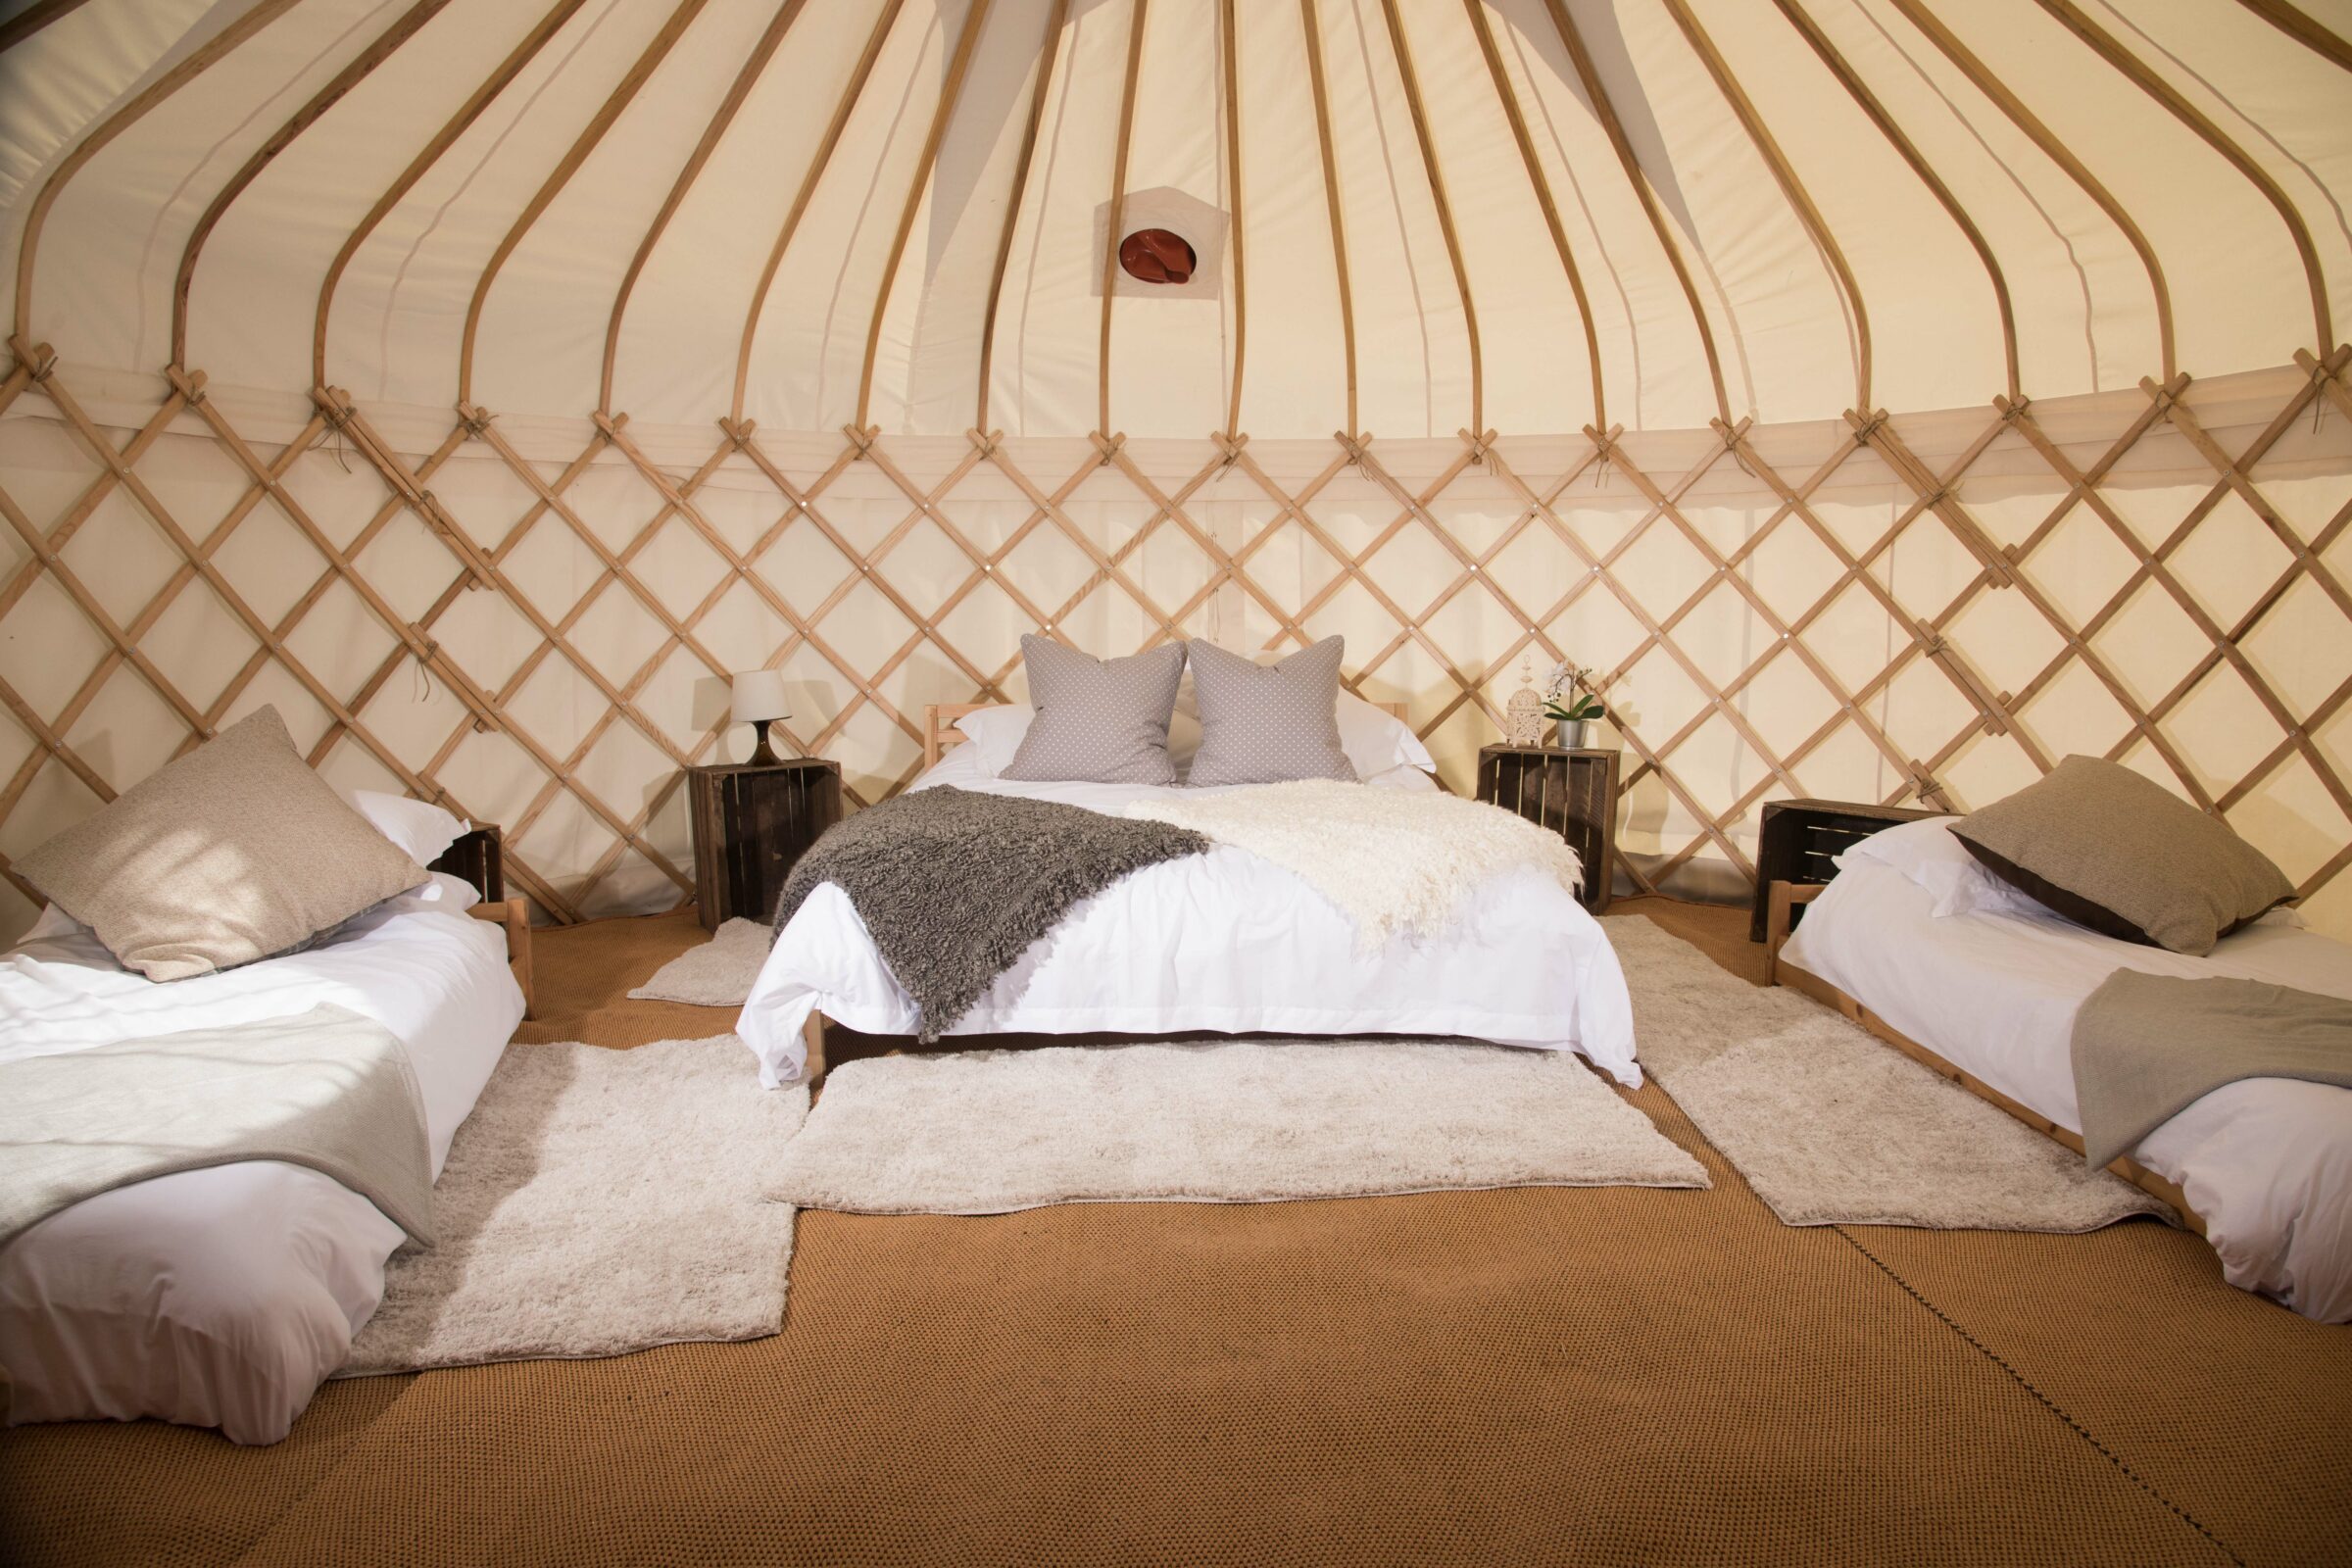 Inside a star-gazing yurt